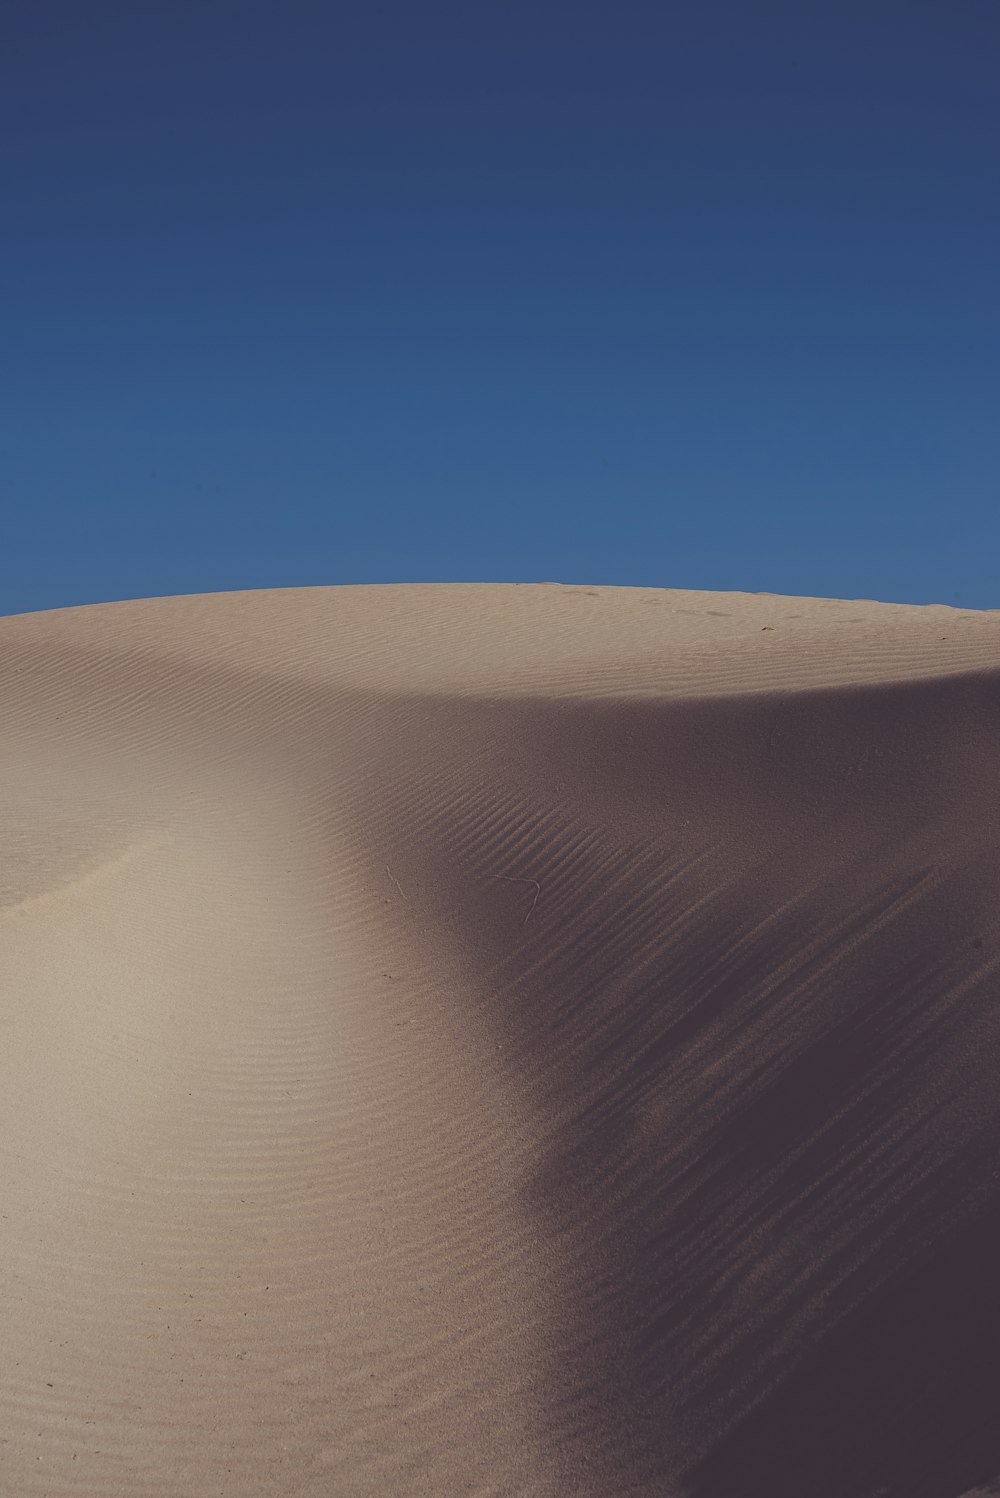 empty desert under blue sky during daytime